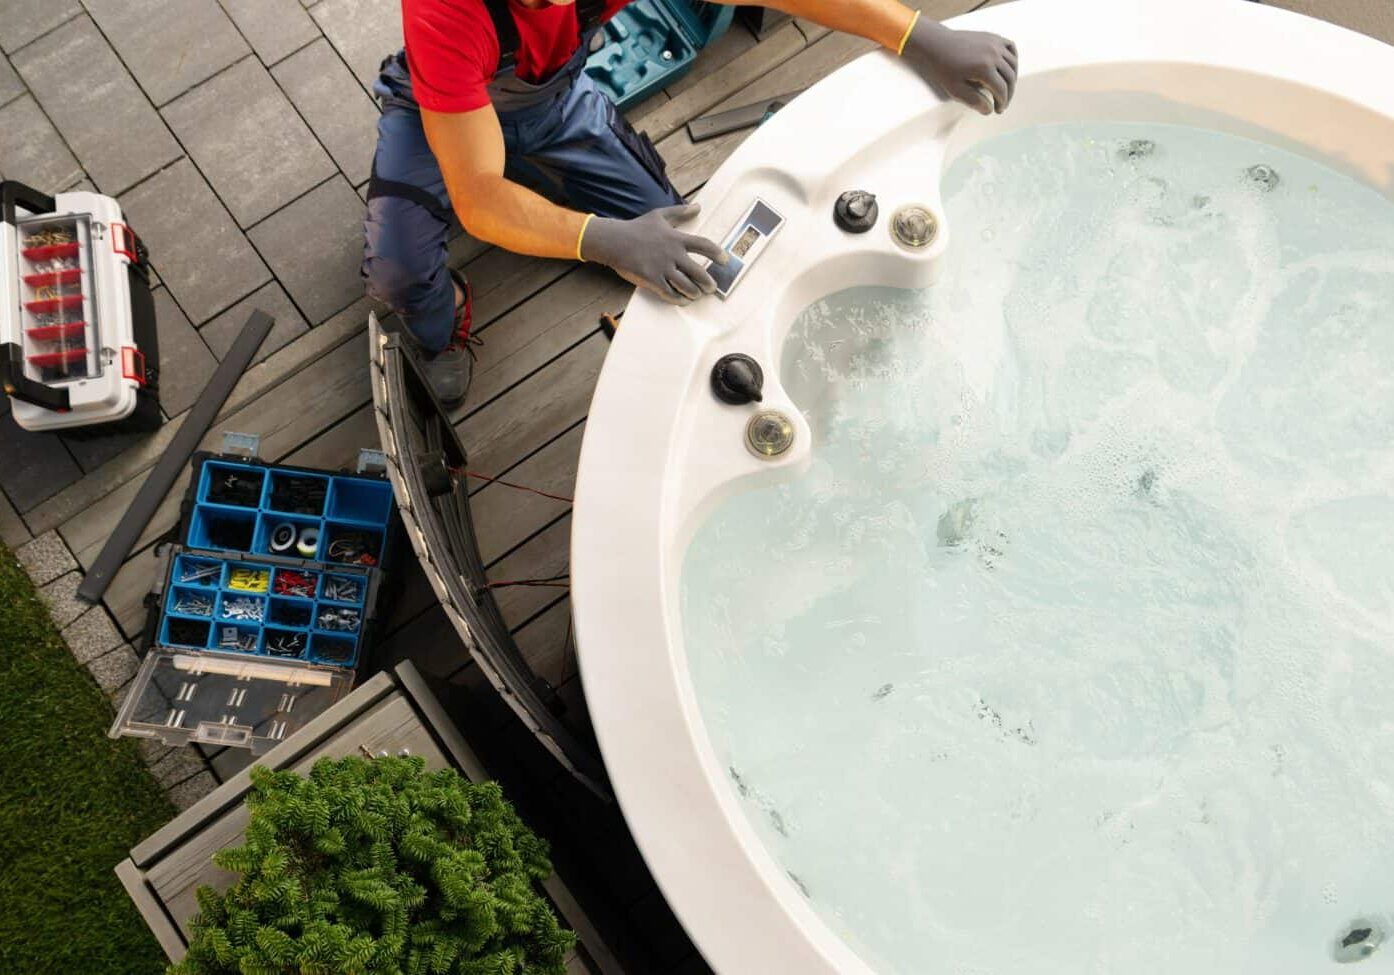 Professional Caucasian Hot Tub Technician Servicing Circular SPA Inside Residential Backyard Garden. Outdoor Bathtub Maintenance.